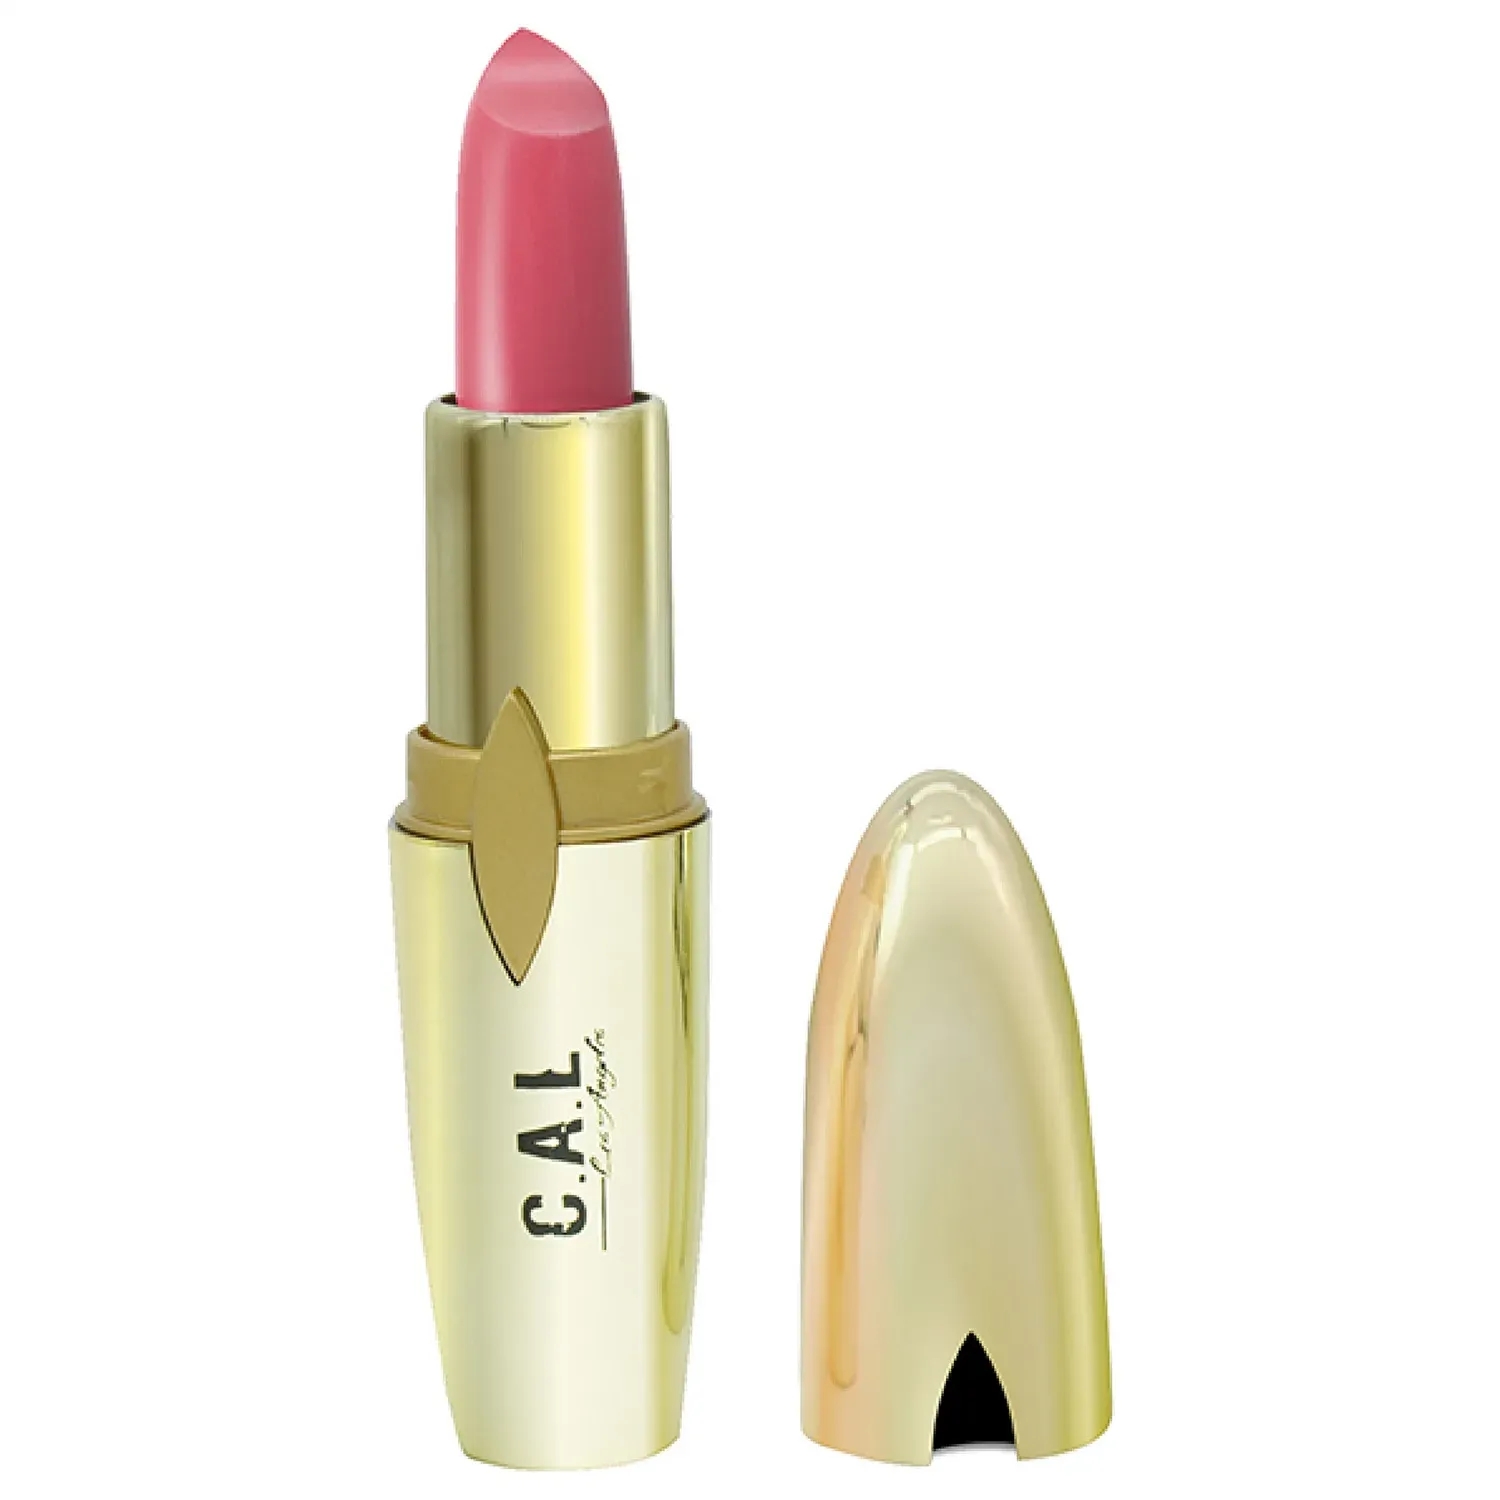 C.A.L Los Angeles | C.A.L Los Angeles Sheer Blush Perfect Pout Lipstick - Sheer Blush (15g)